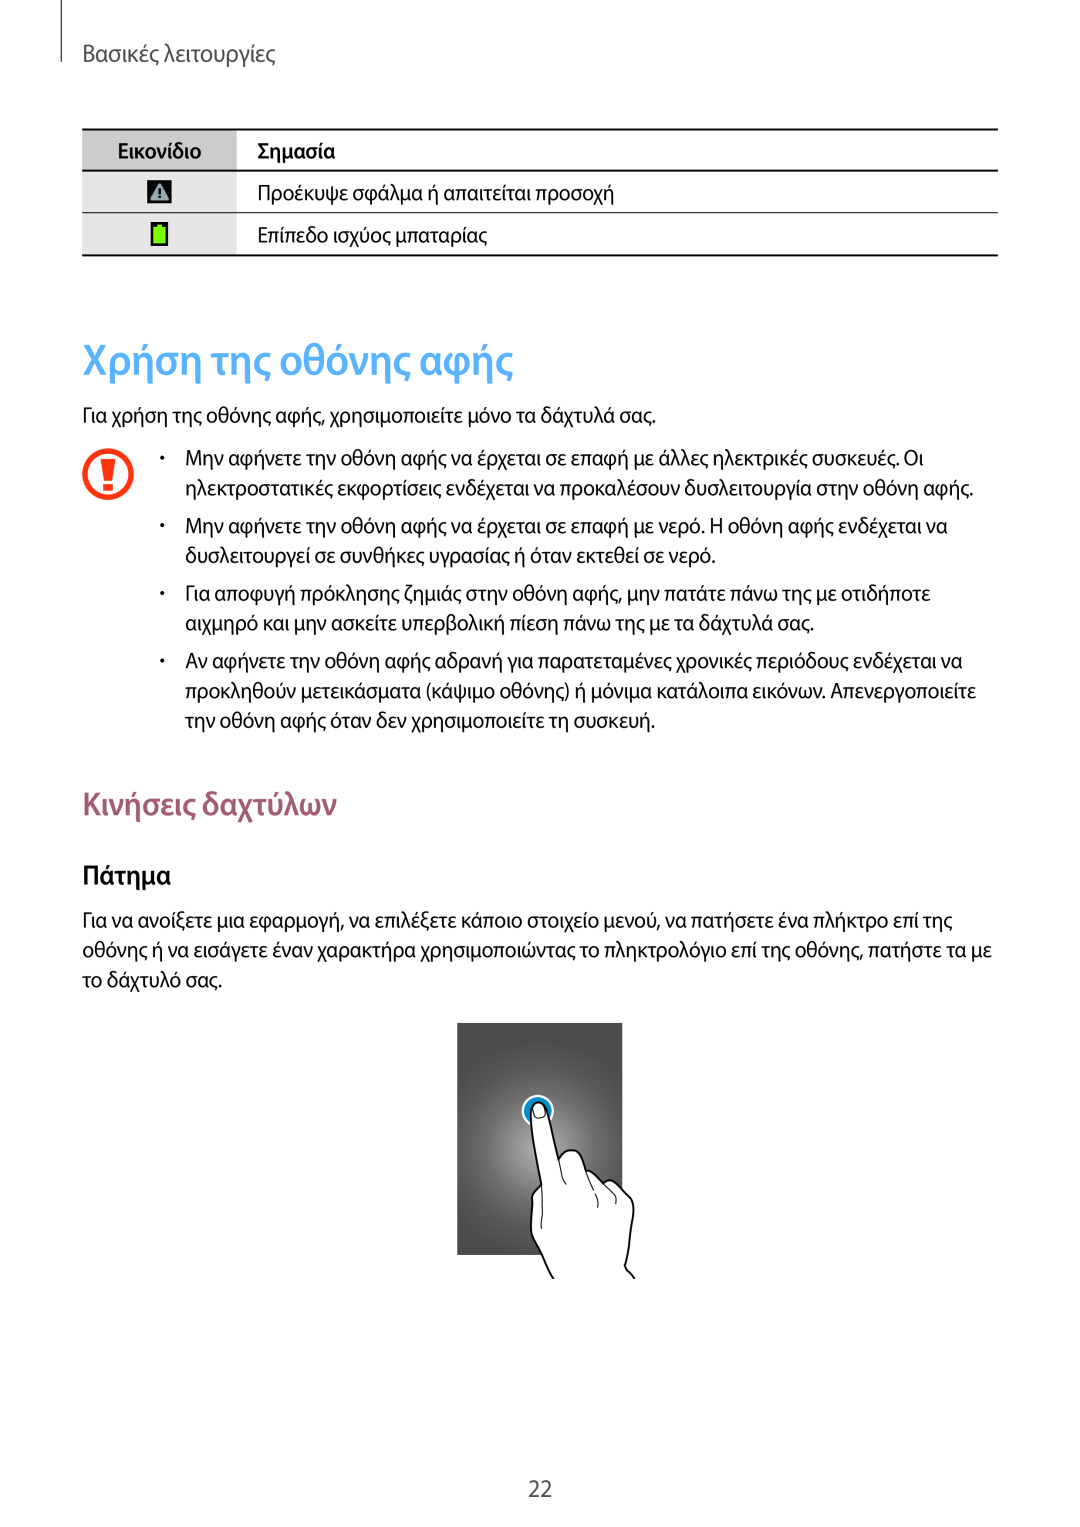 Samsung GT-S7710KRACYV manual Χρήση της οθόνης αφής, Κινήσεις δαχτύλων, Πάτημα, Βασικές λειτουργίες, Εικονίδιο Σημασία 